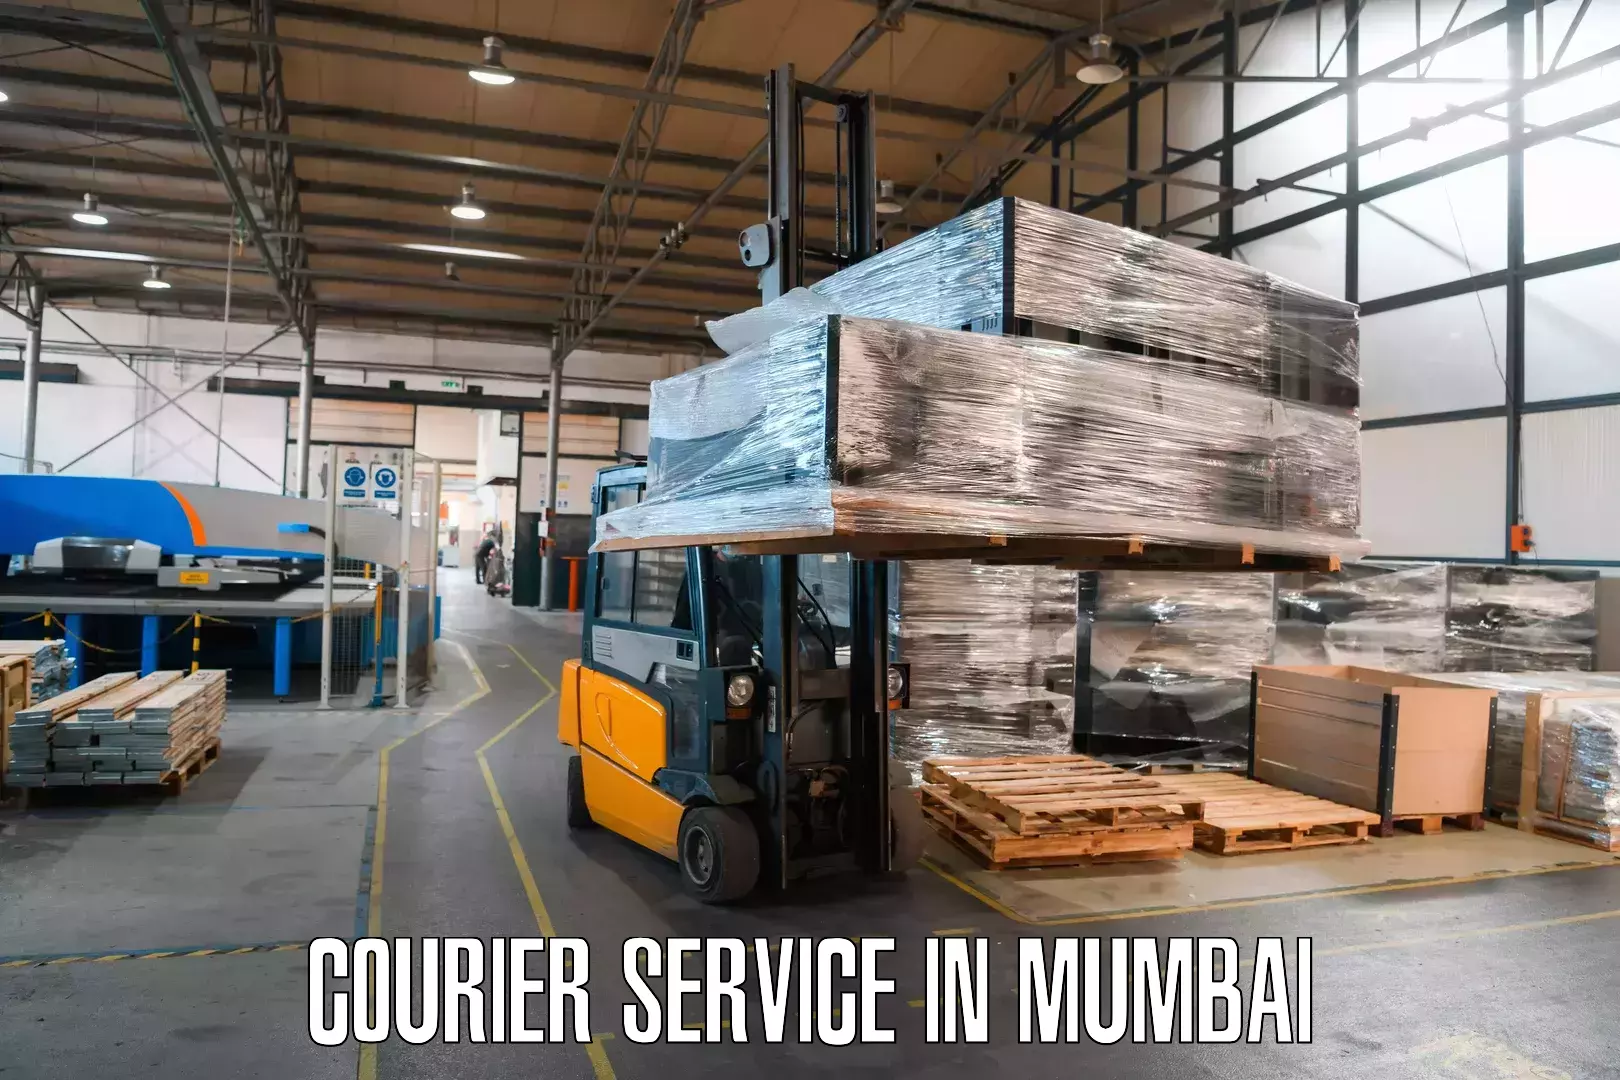 Modern courier technology in Mumbai